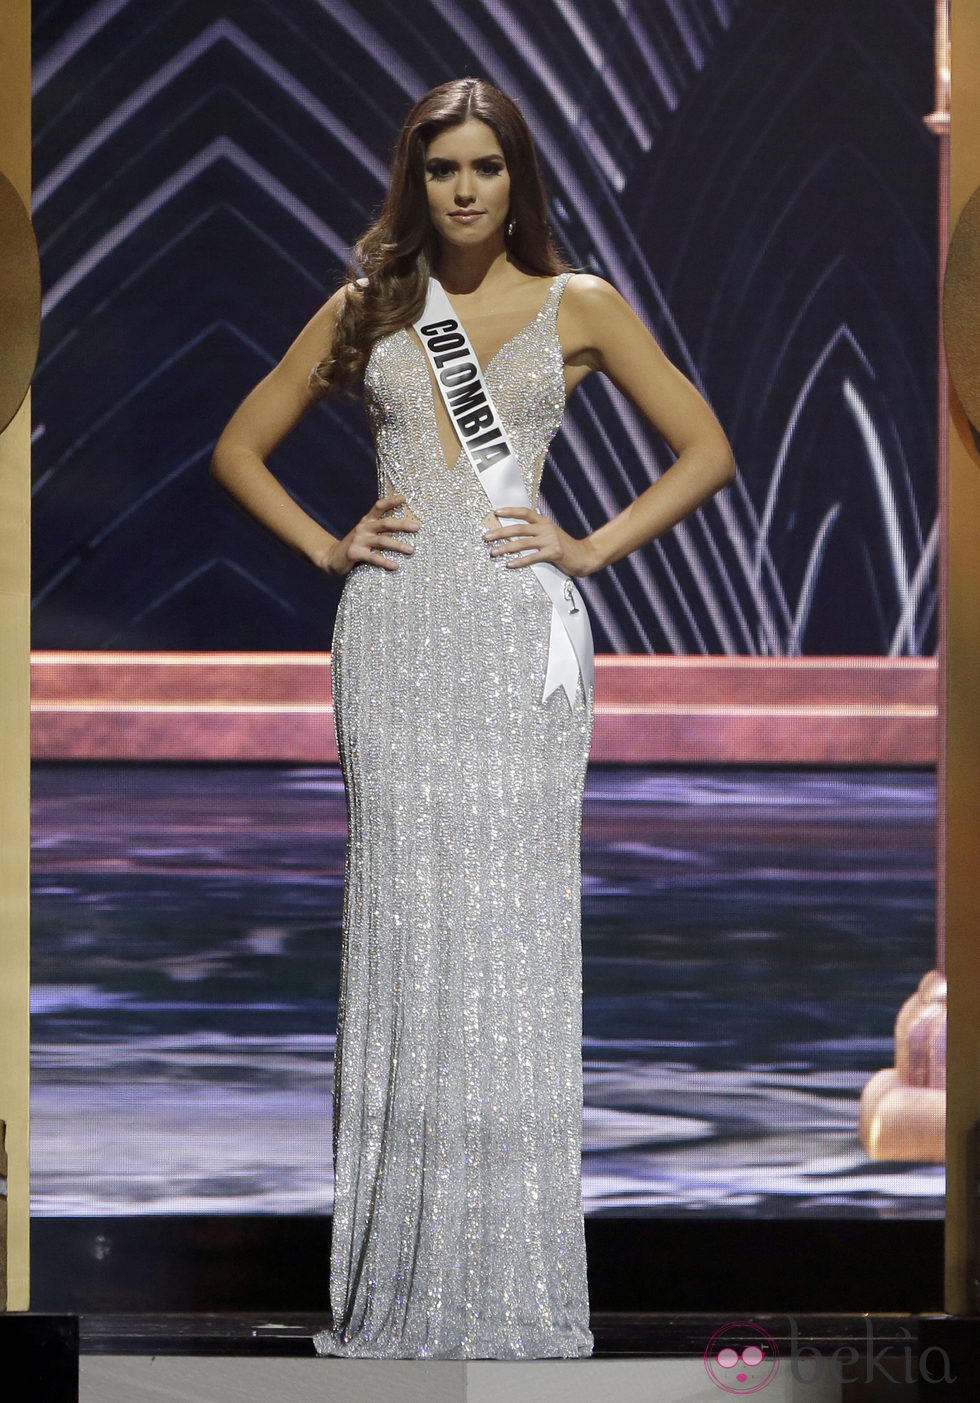 La Miss Colombia Paulina Vega en la gala final de Miss Universo 2015